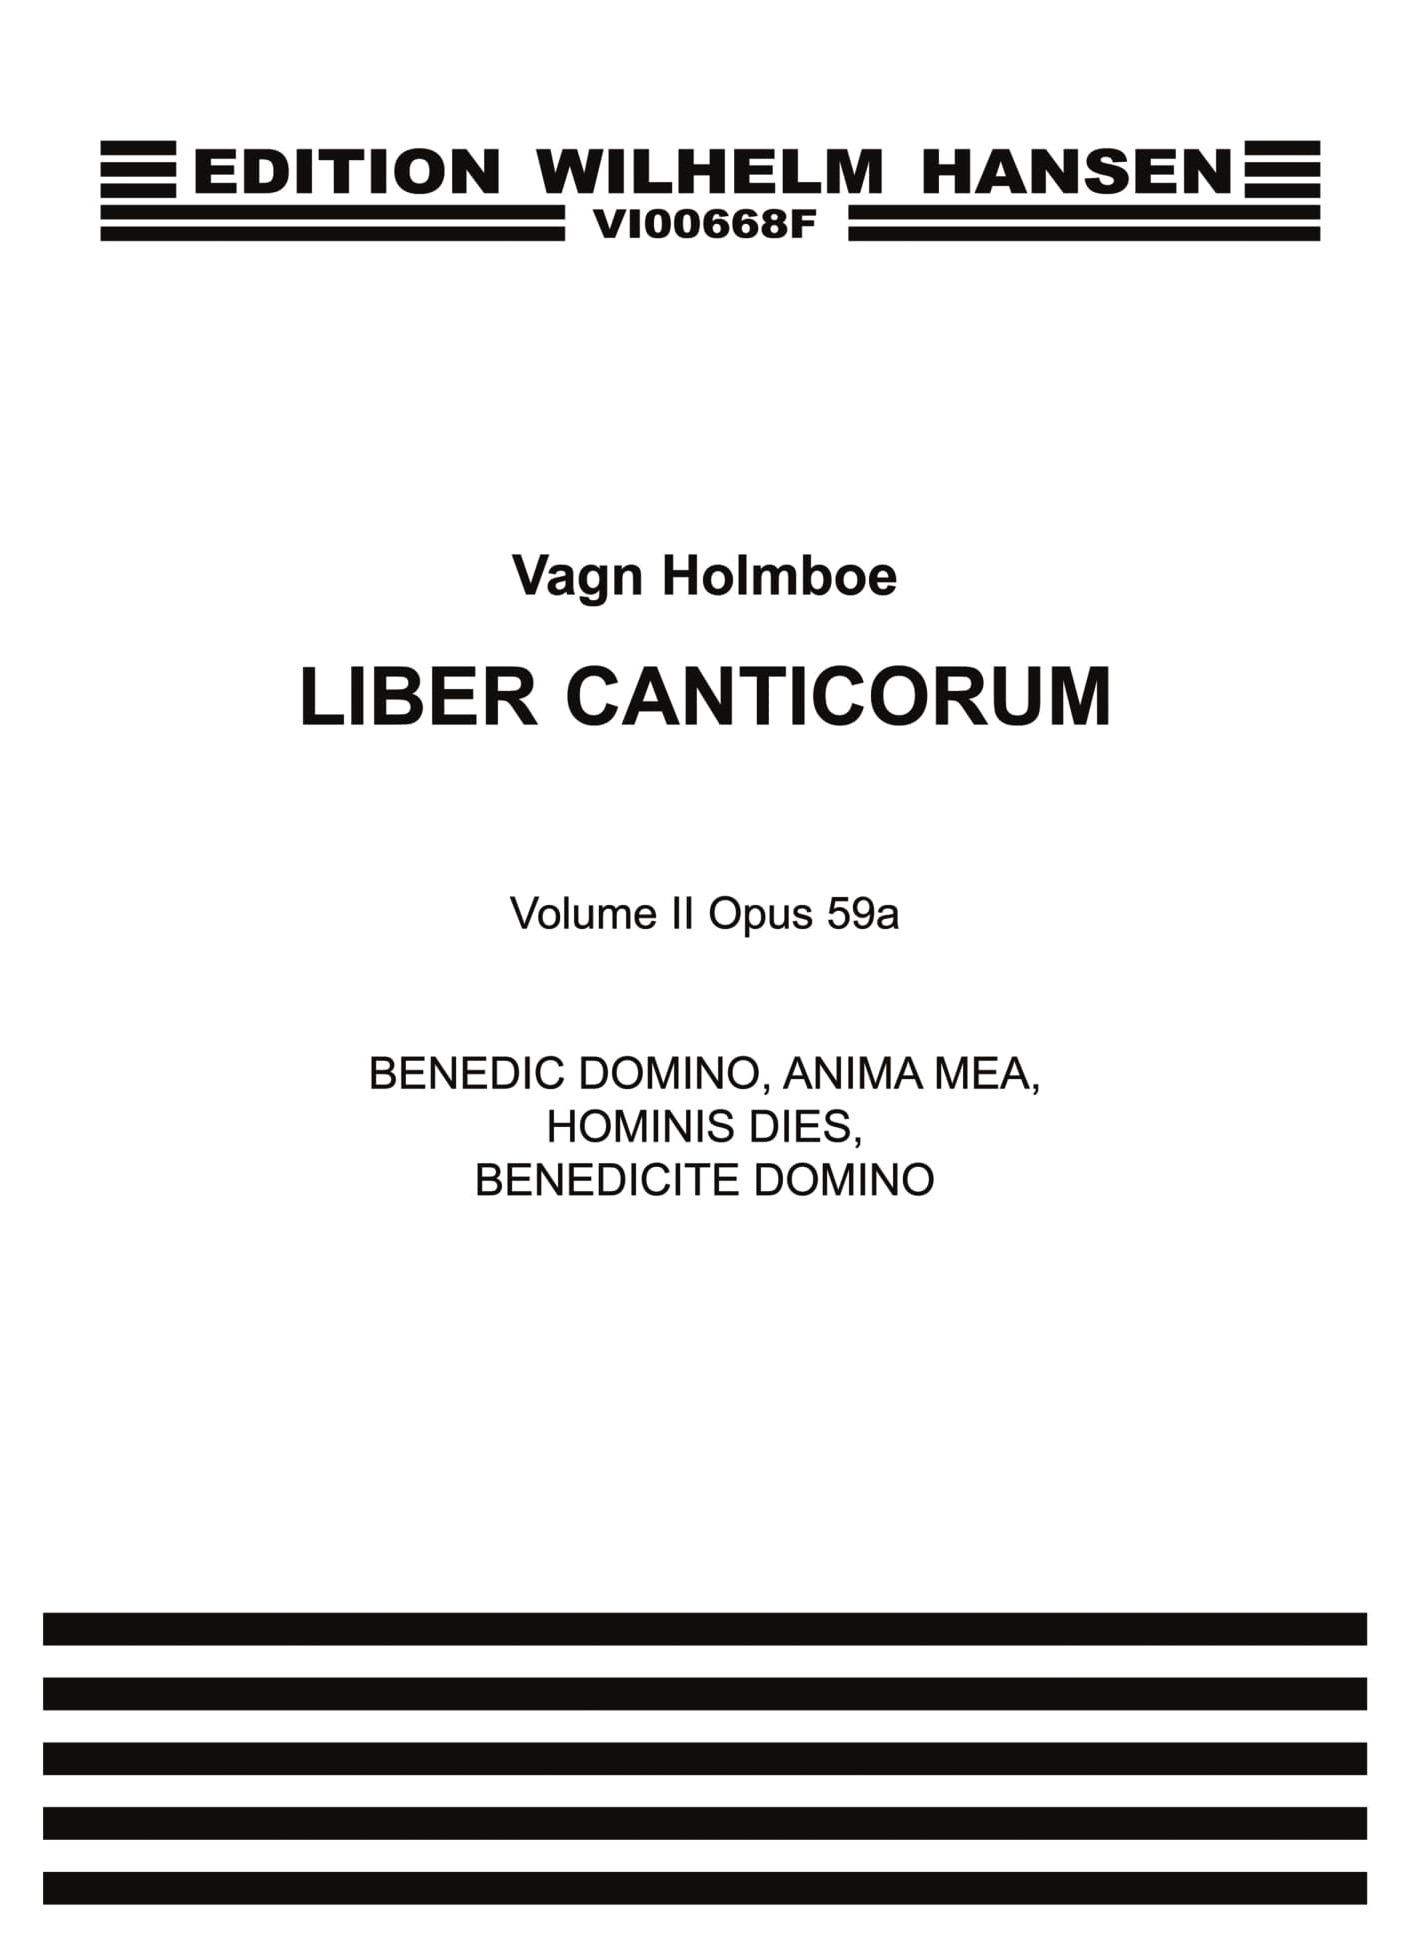 Vagn Holmboe: Benedic Domino  Anima Op.59a: SATB: Vocal Score